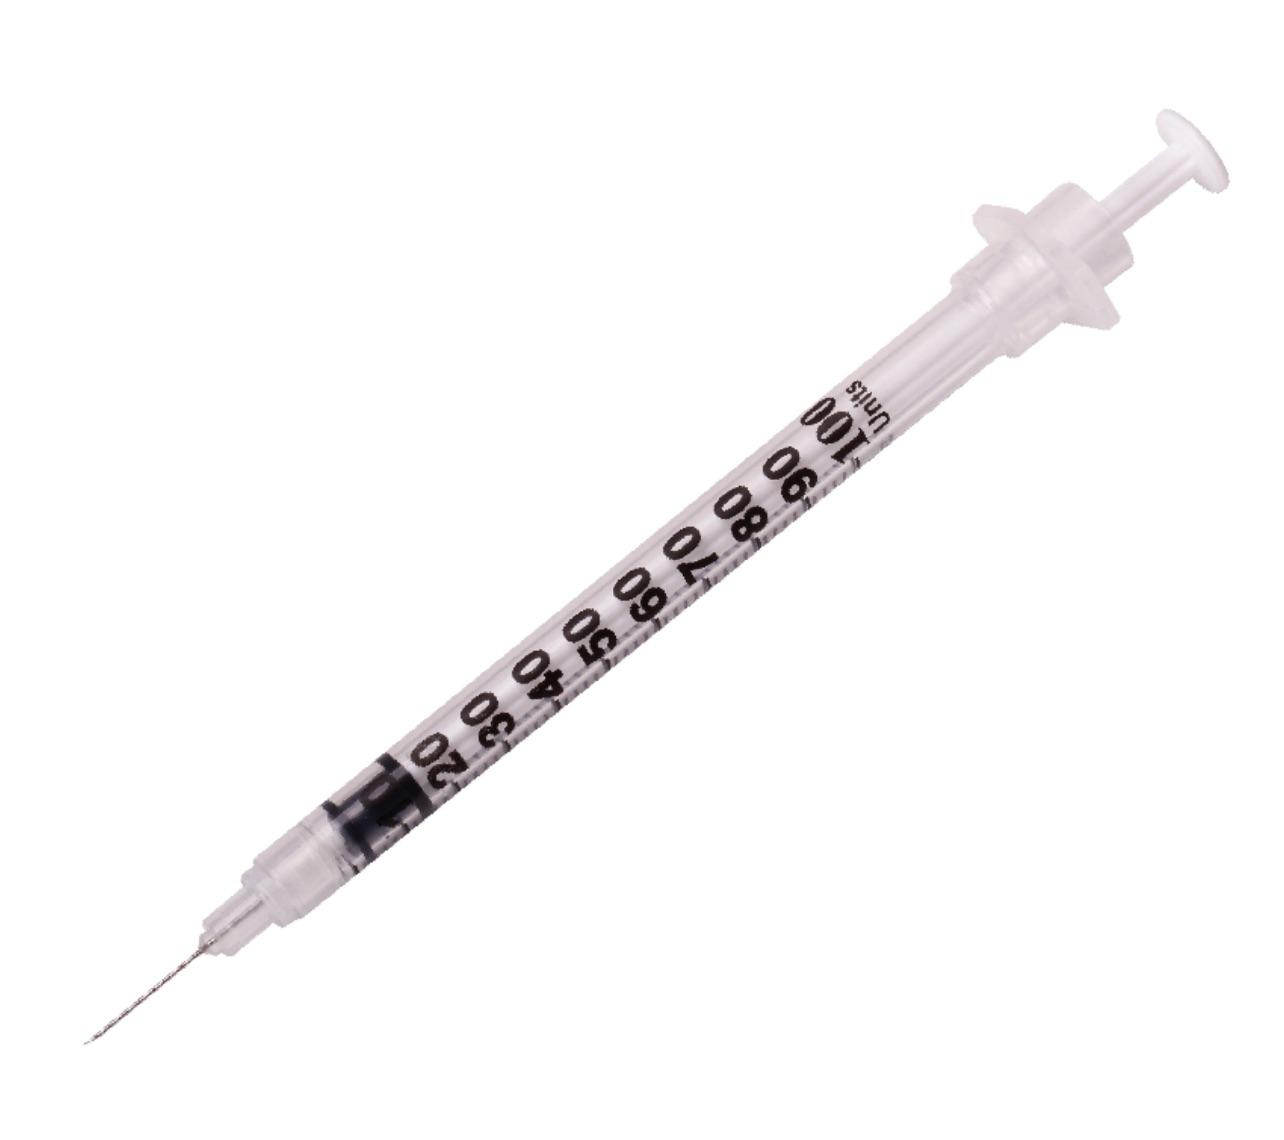 Multigate Insulin Safety Syringe 1mL 29gx13Mm BOX 100